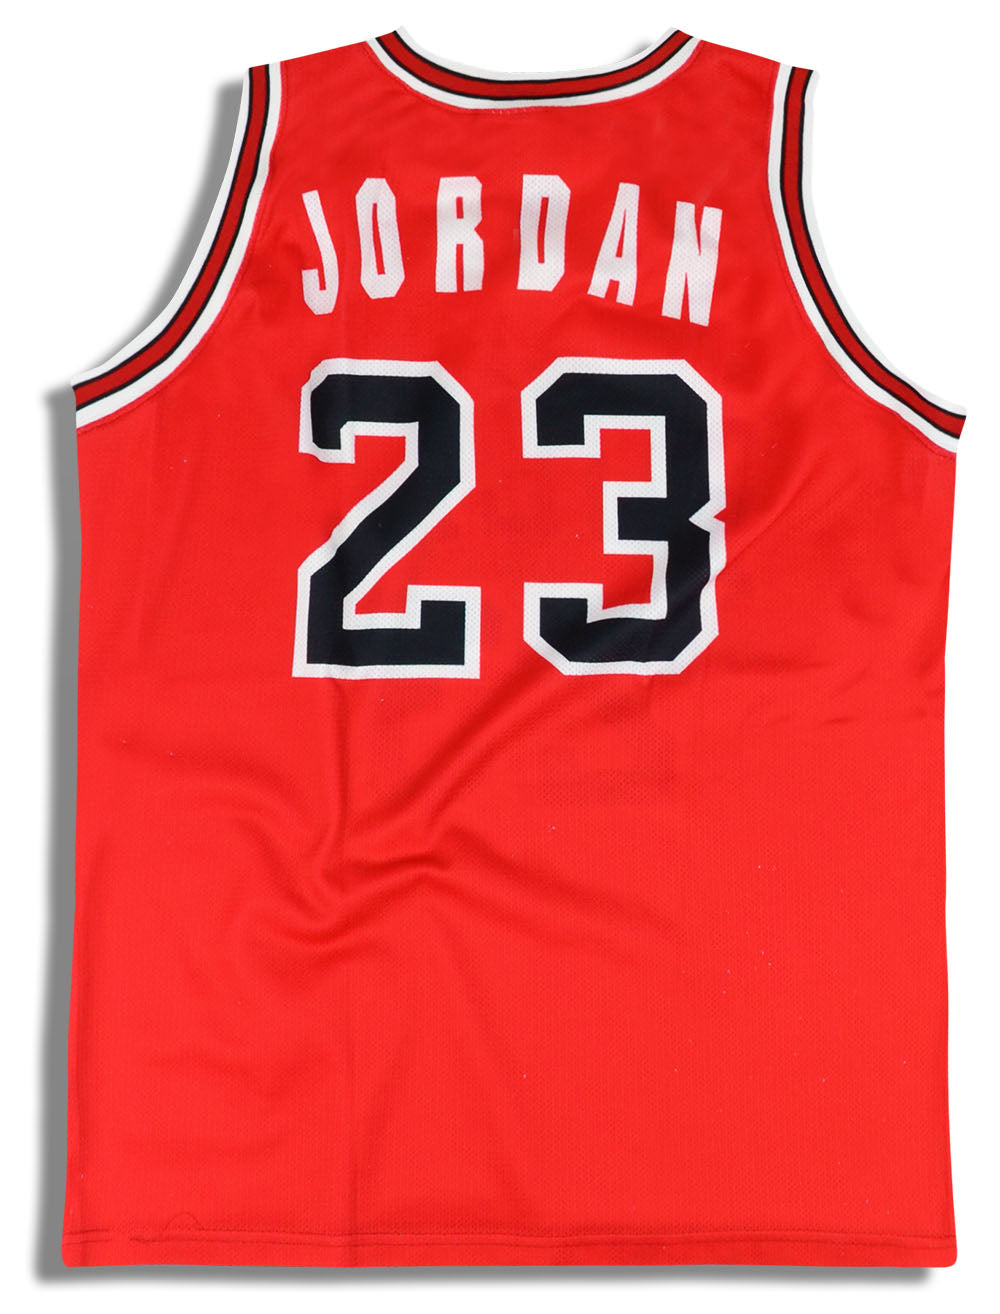 Vintage Gear: Champion Michael Jordan #45 Bulls Replica Jersey - Air  Jordans, Release Dates & More